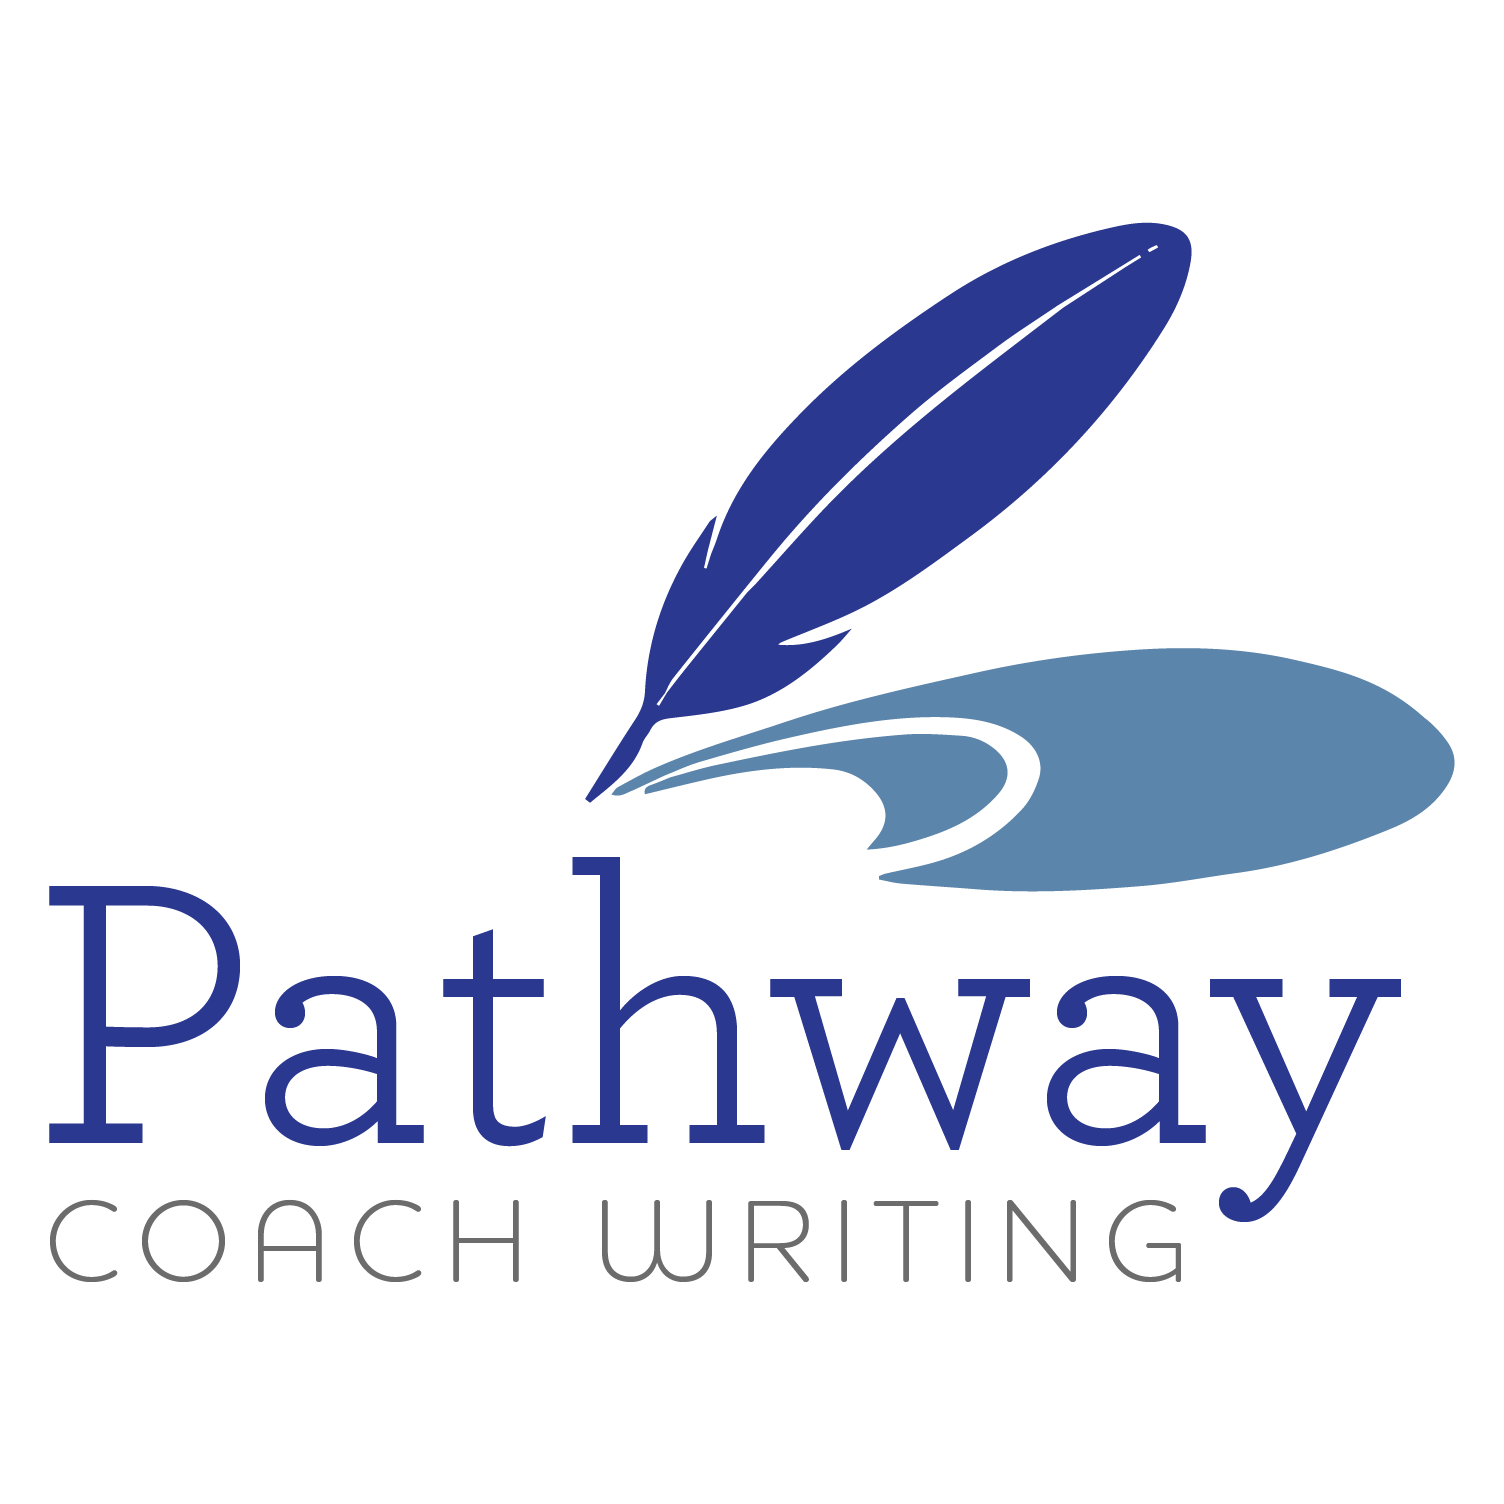 Pathway Coach Writing